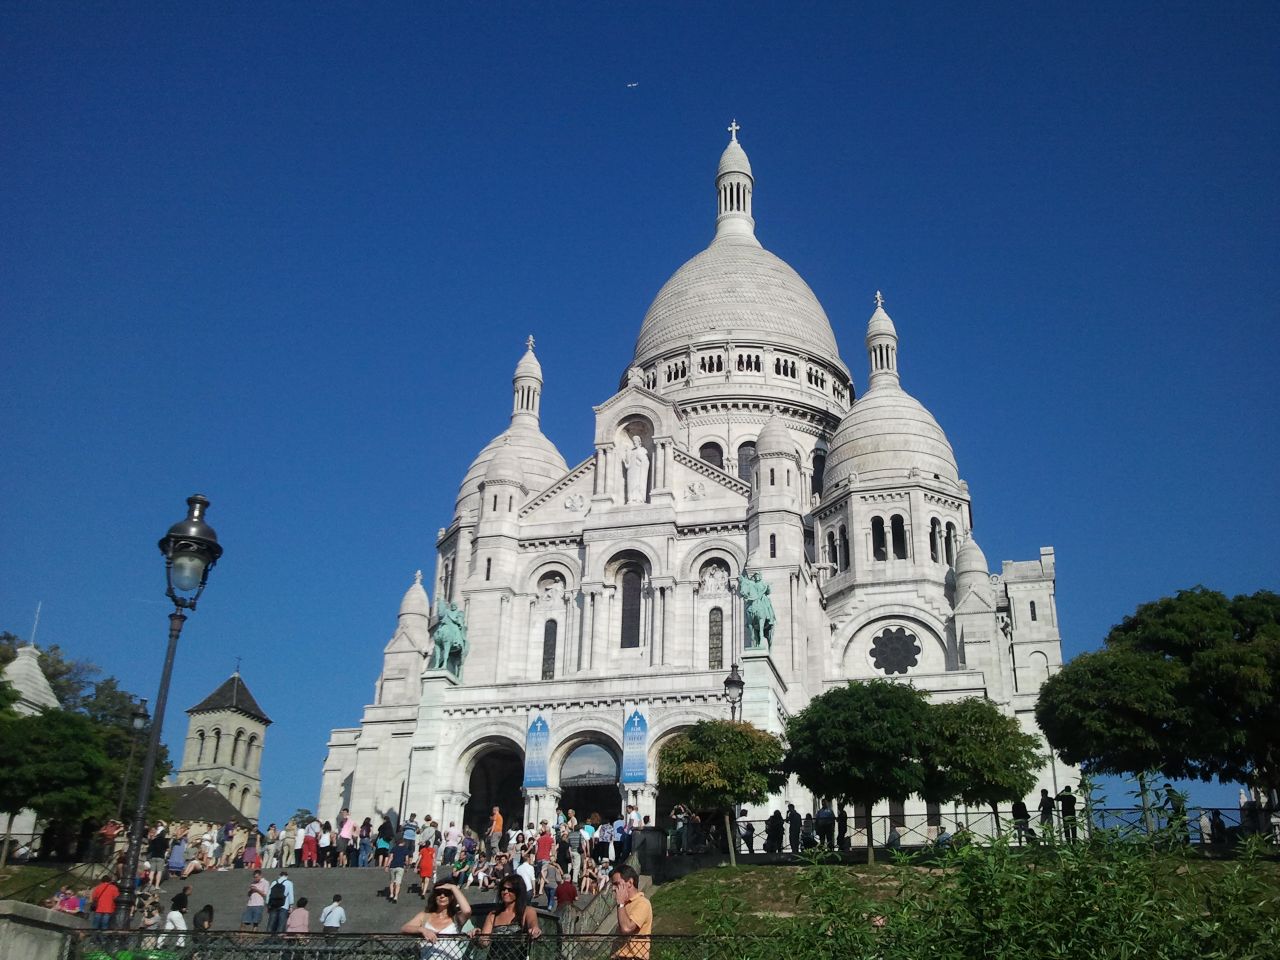 The Sacre Coeur Basilica offers sweeping views of Paris.